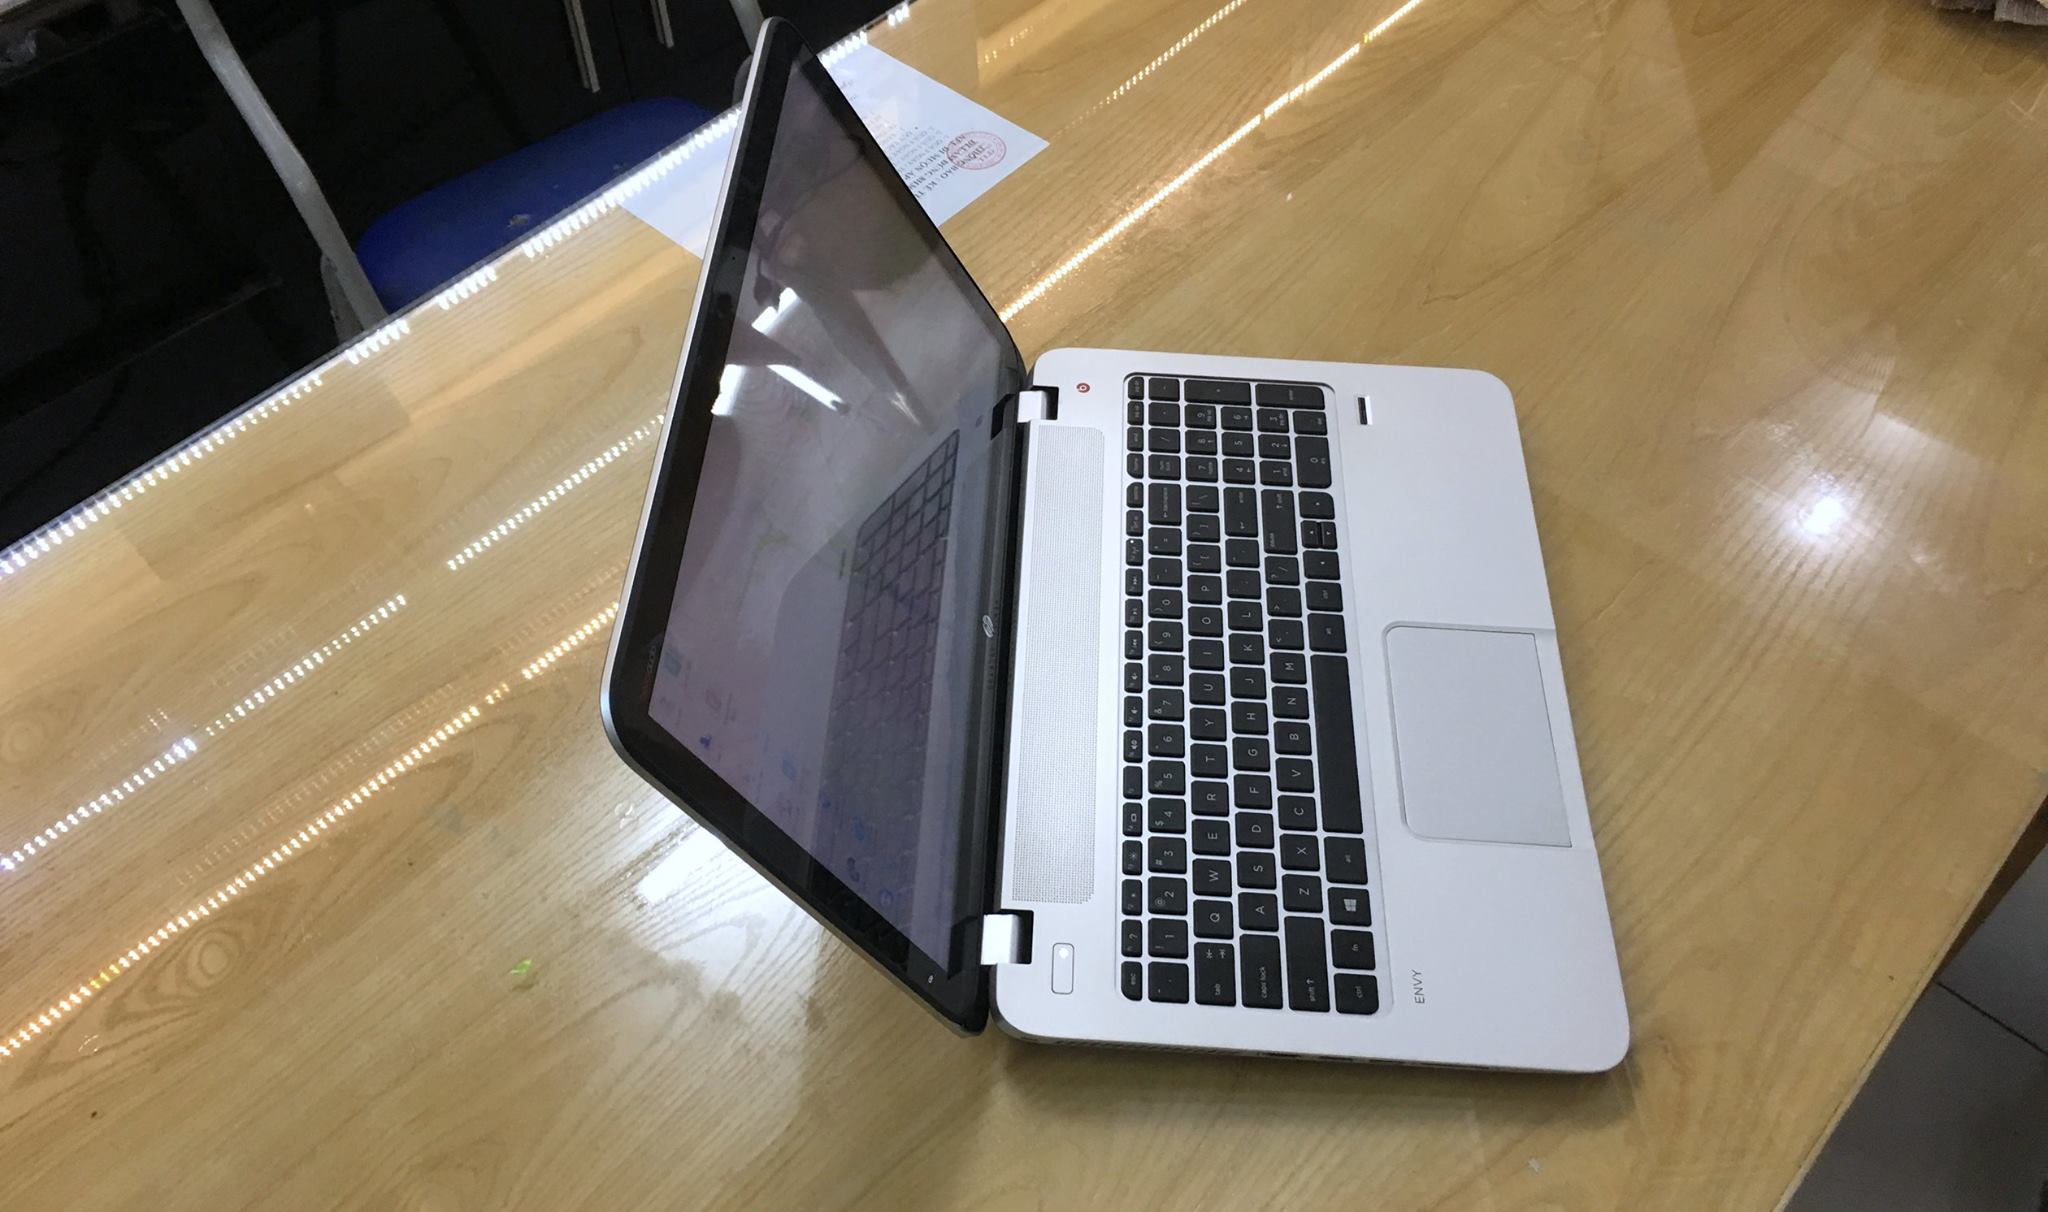 Laptop HP Envy 15 - J005 -6.jpg